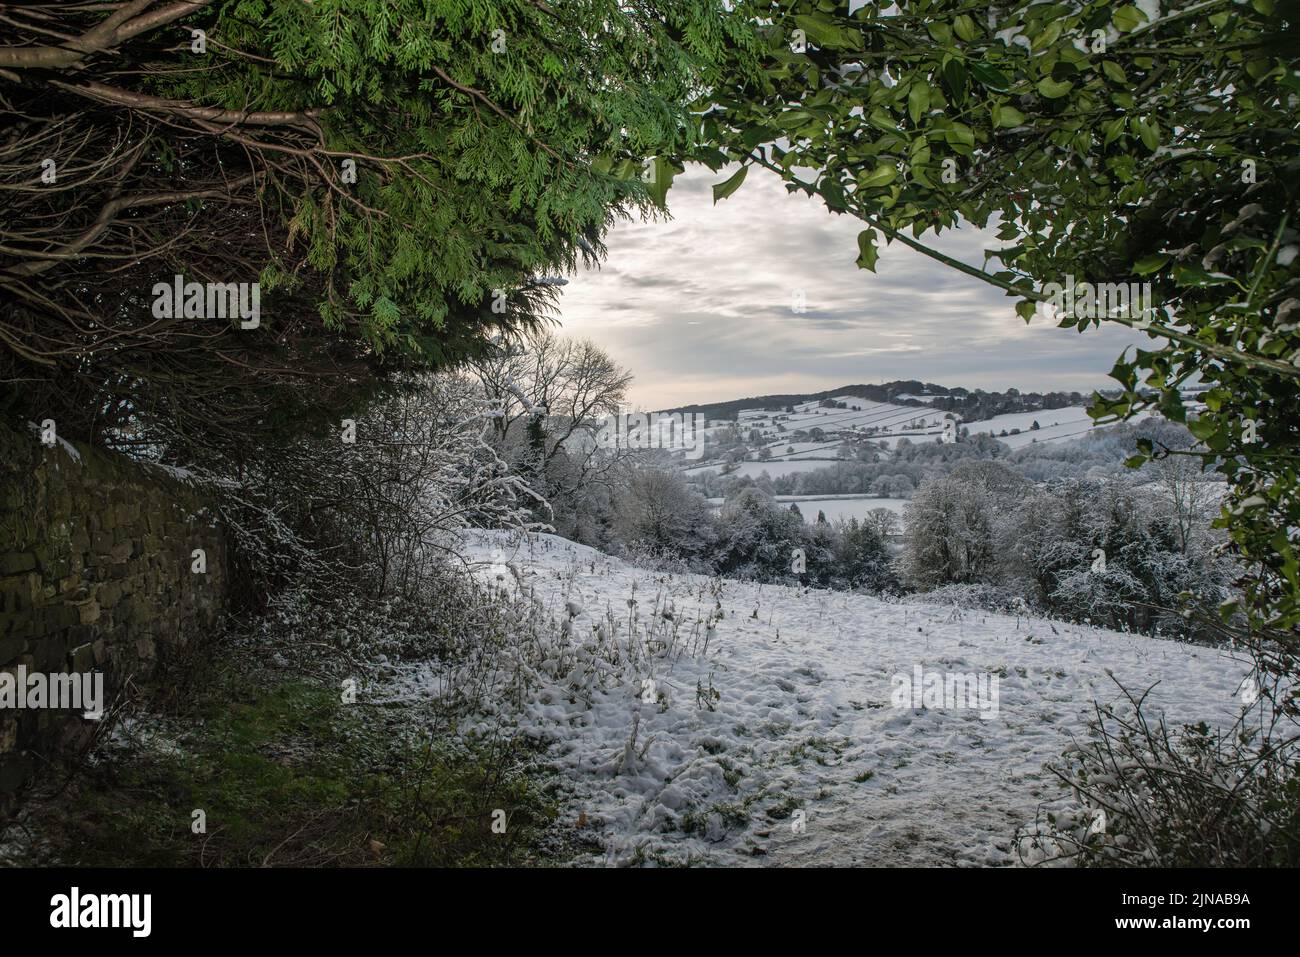 A snowy landscape near Belper in Derbyshire, UK fromed by evergreen trees Stock Photo